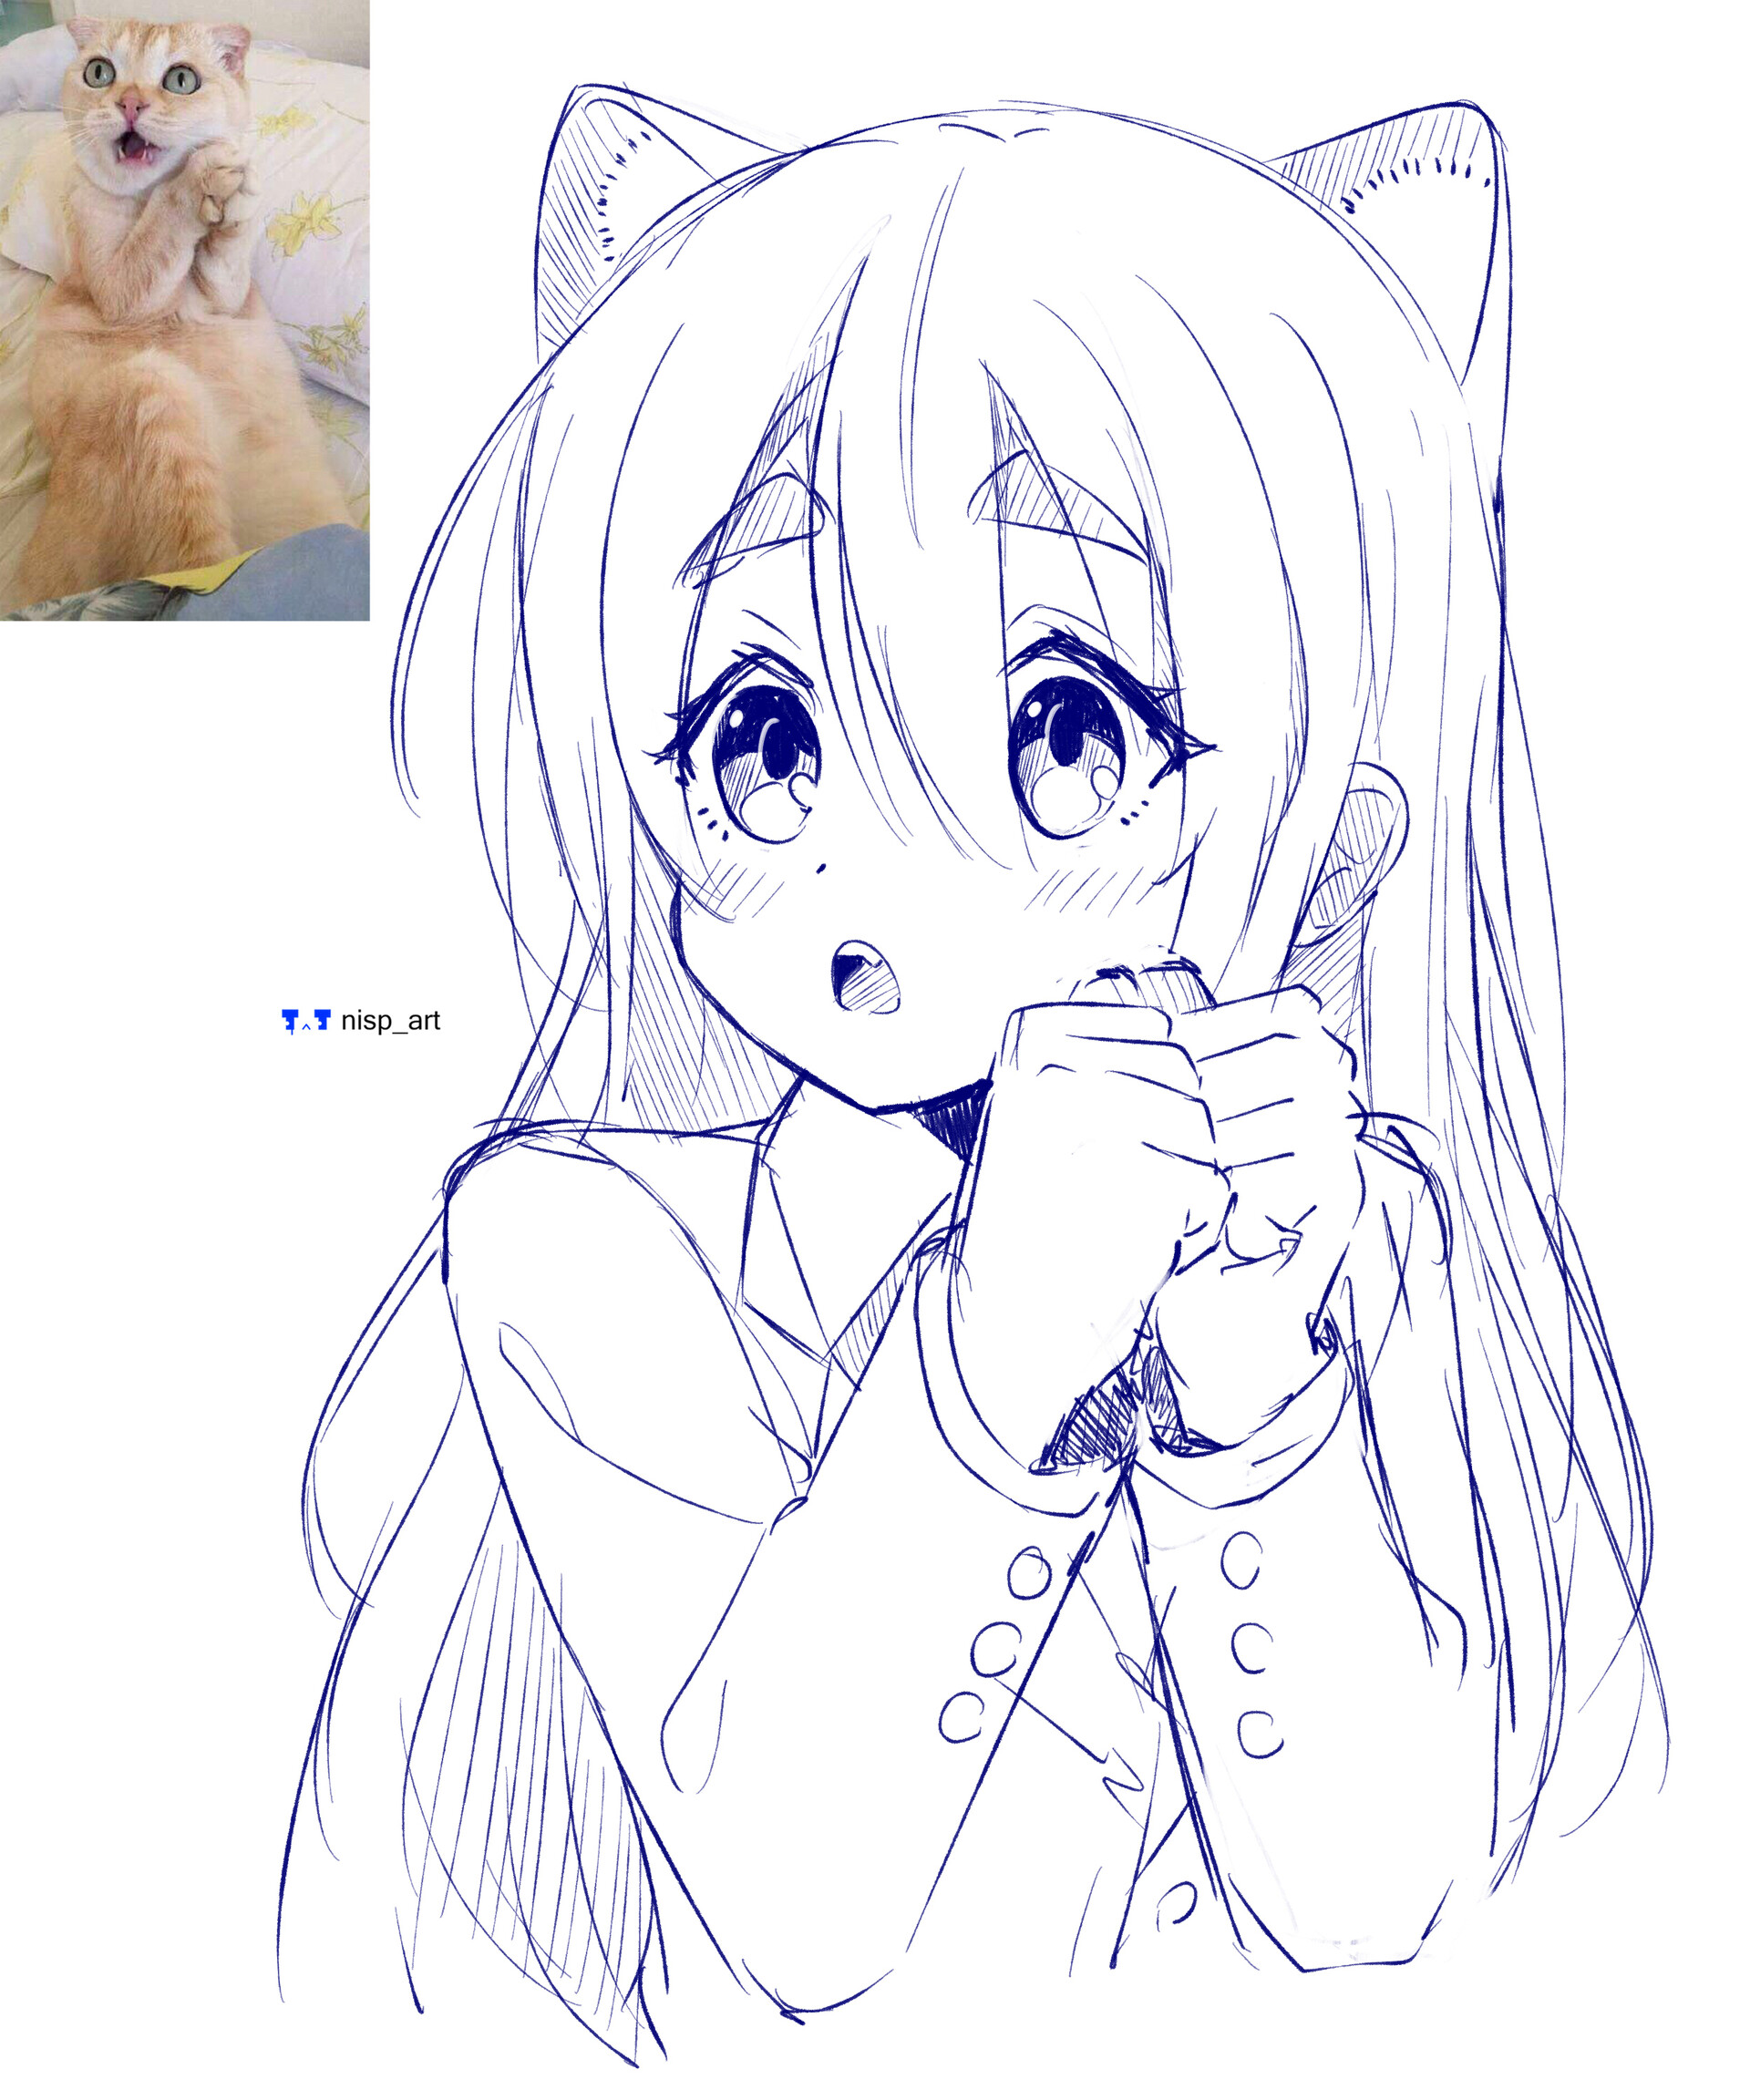 ArtStation - Anime sketch cat